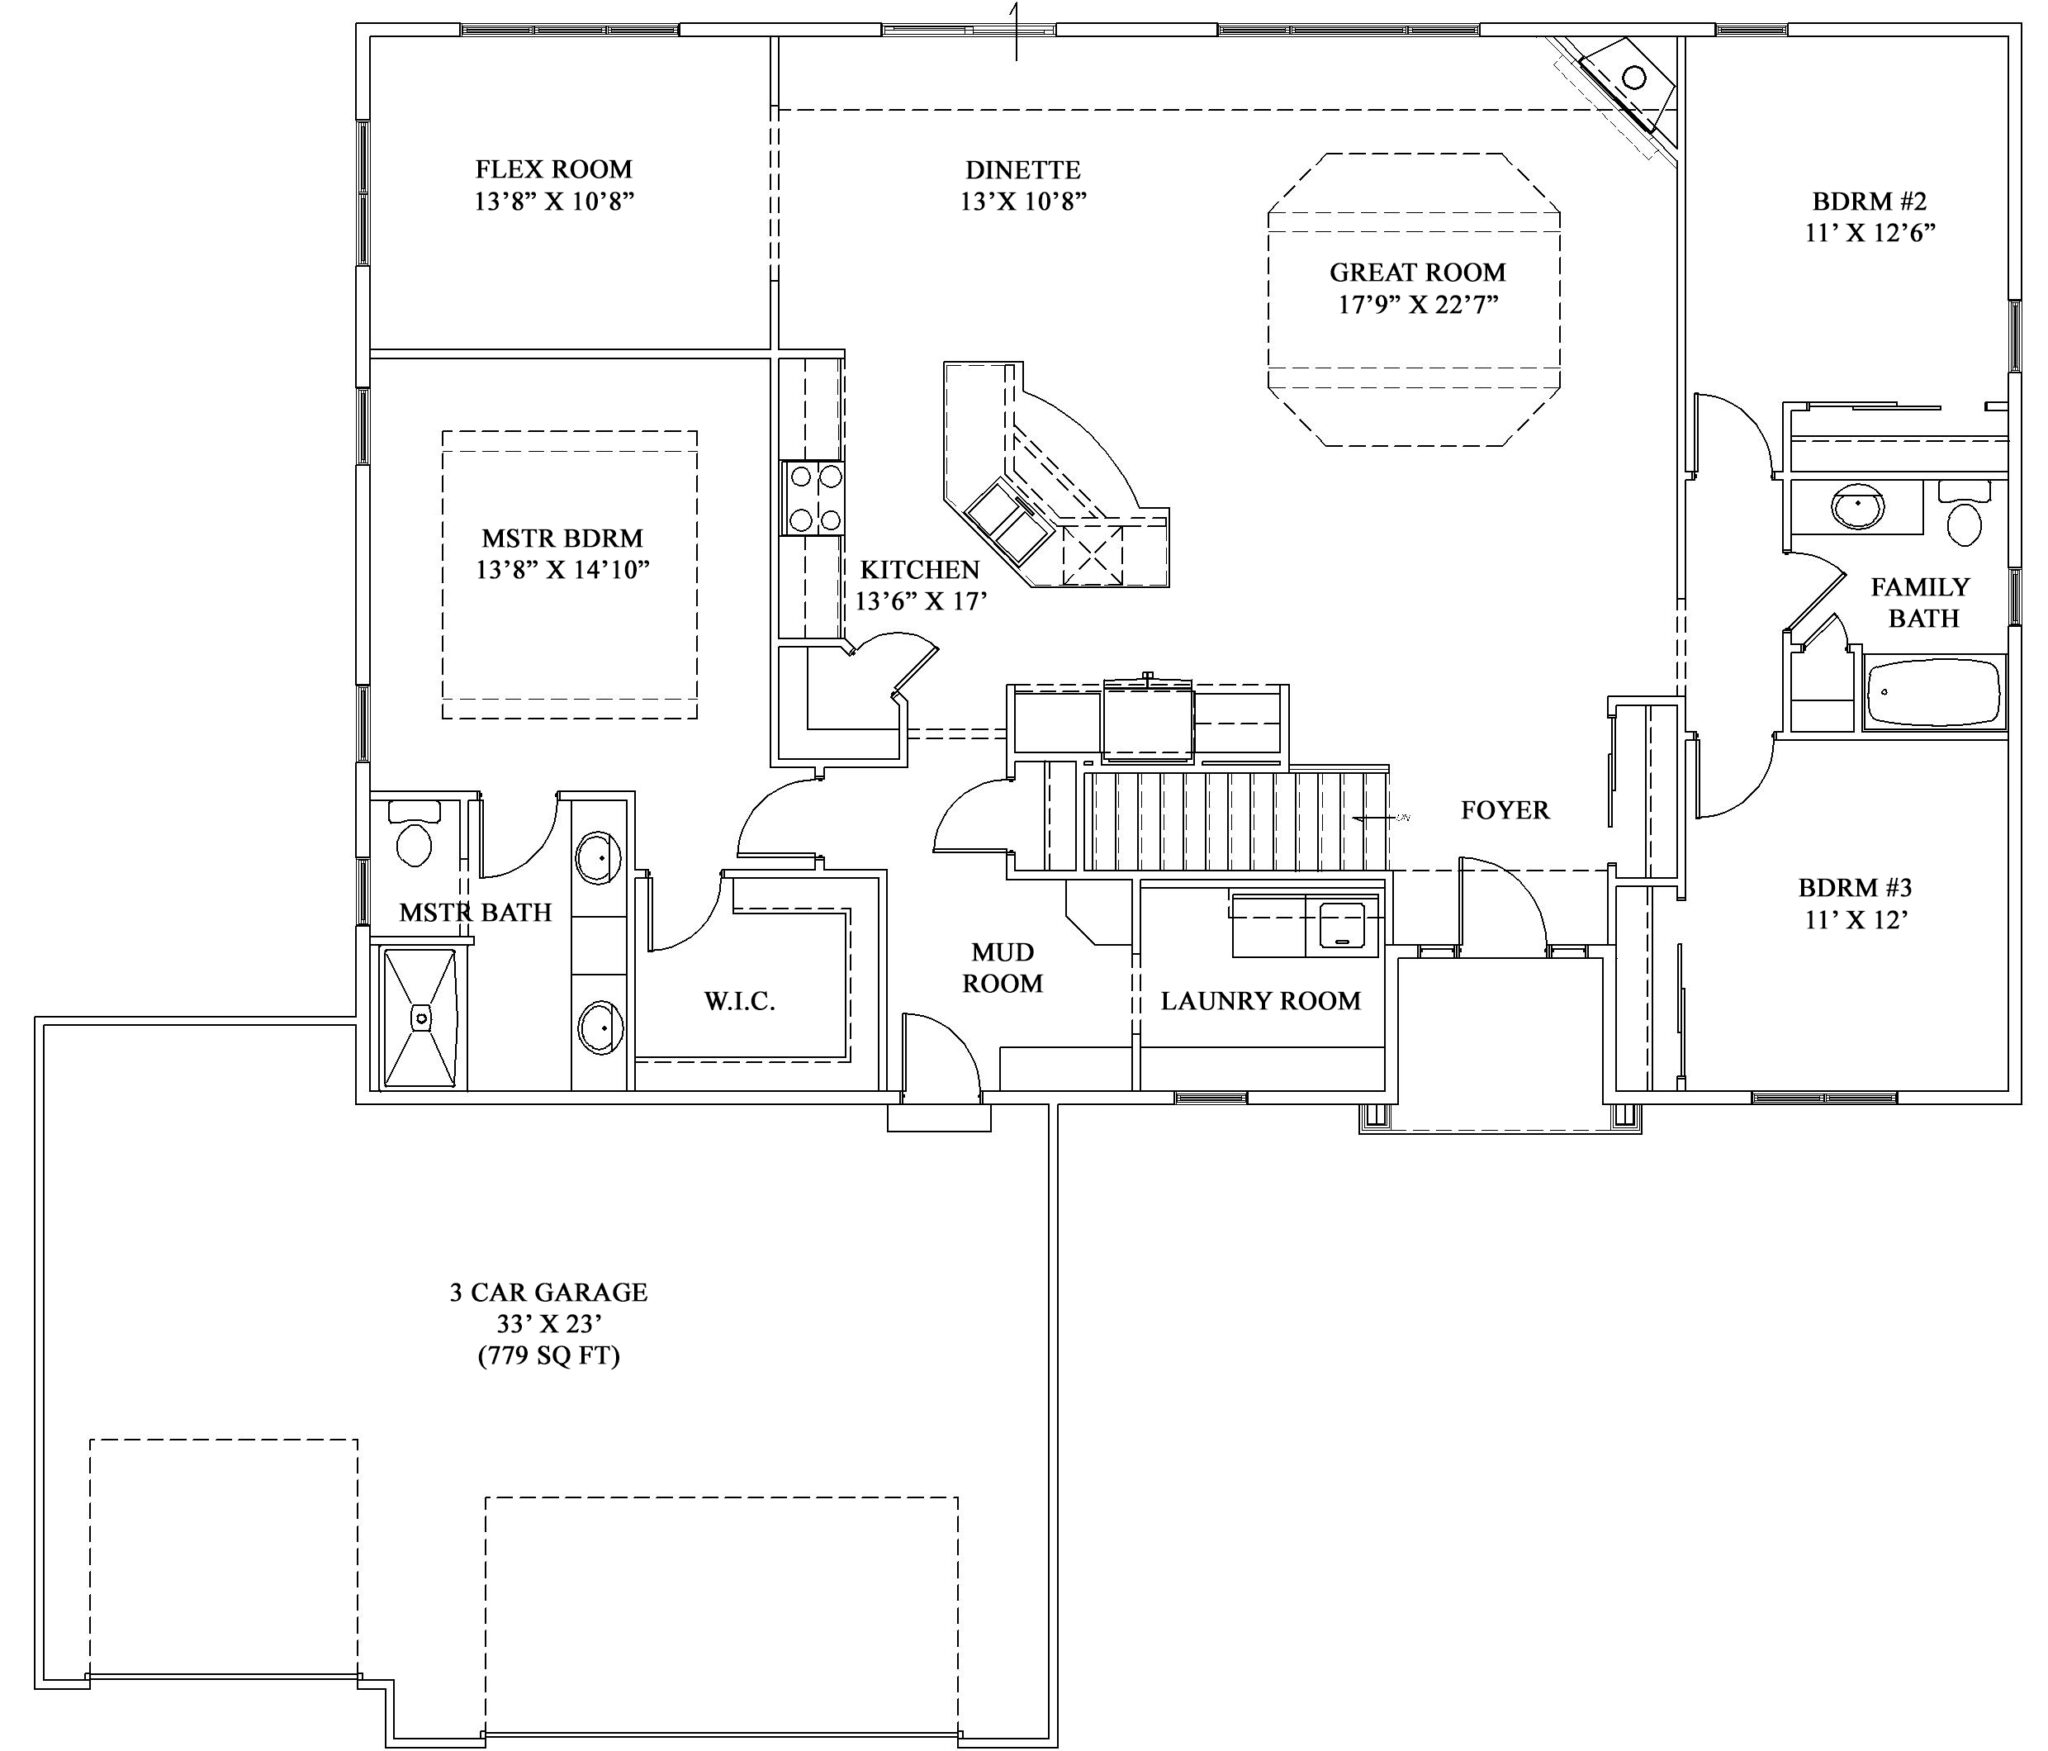 Floorplan for Demlang Home Builders model The Hadley